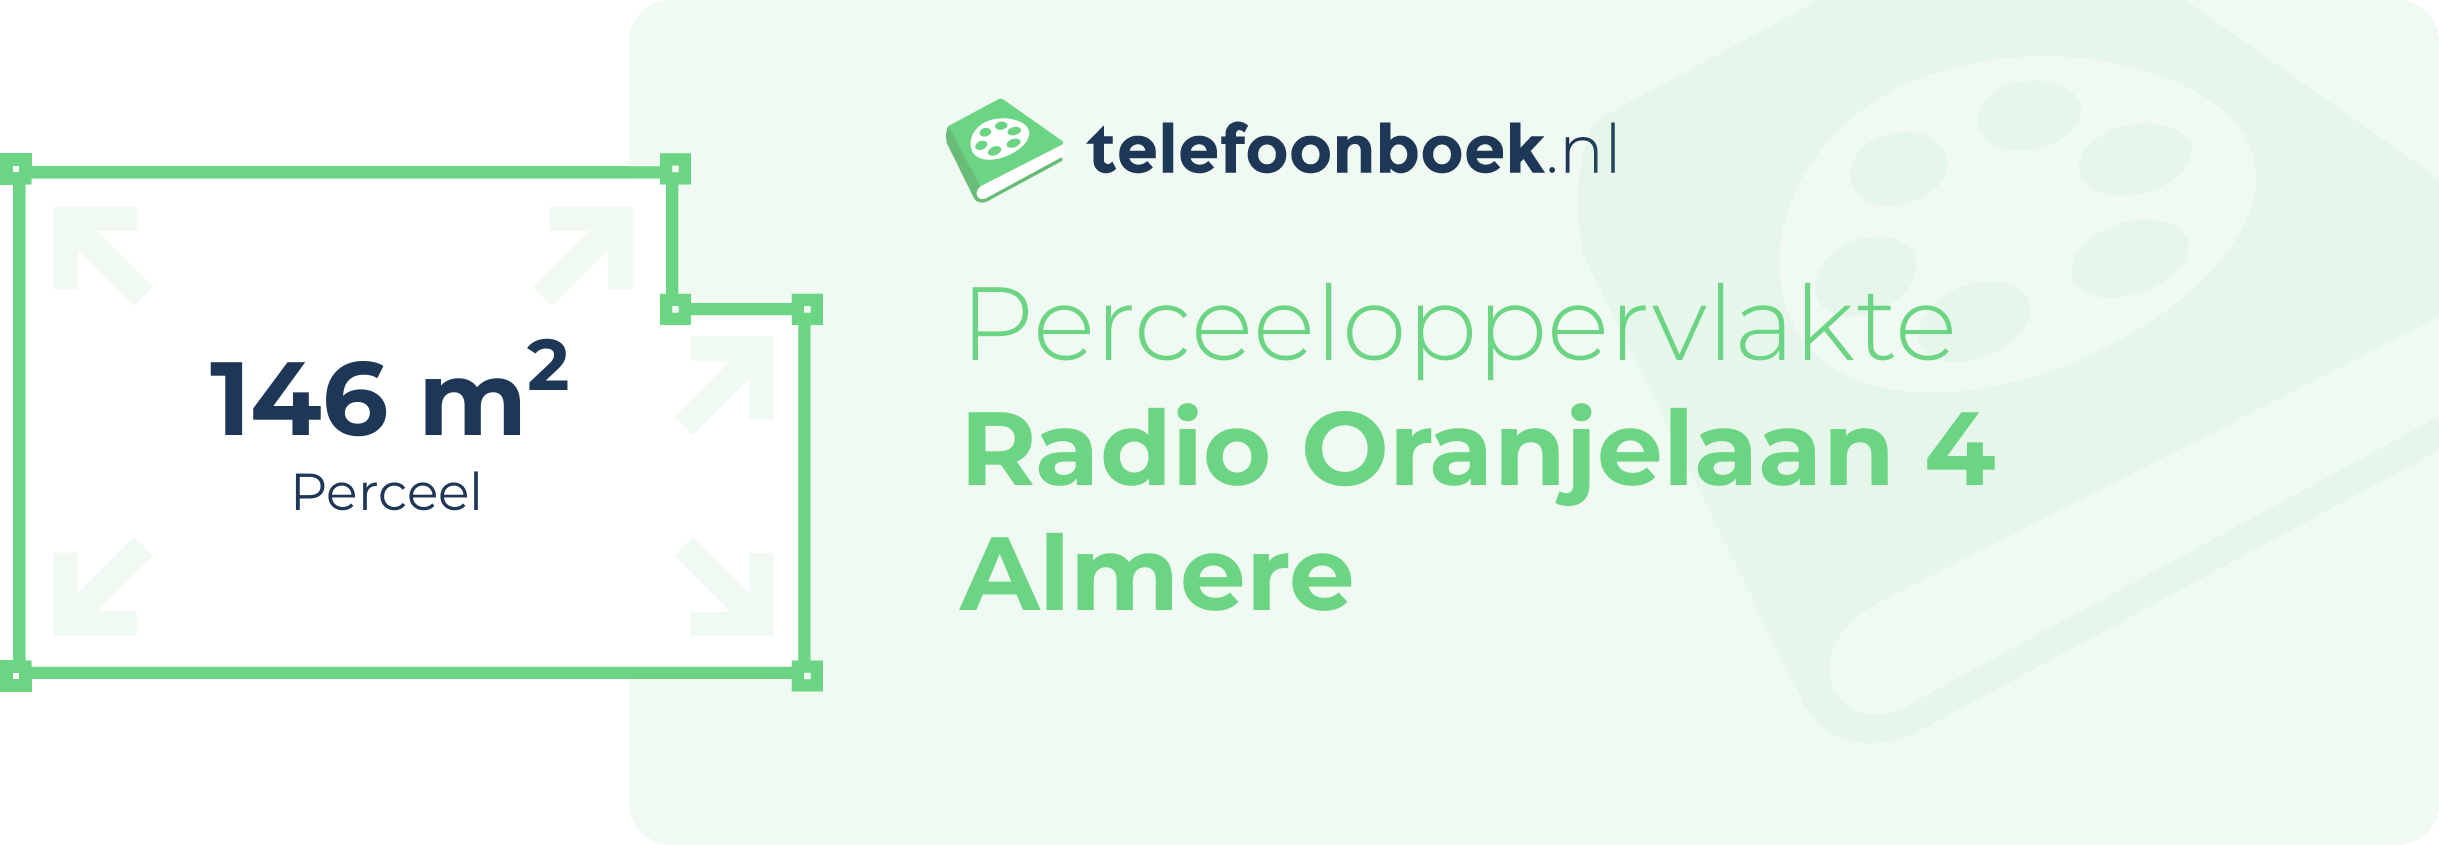 Perceeloppervlakte Radio Oranjelaan 4 Almere